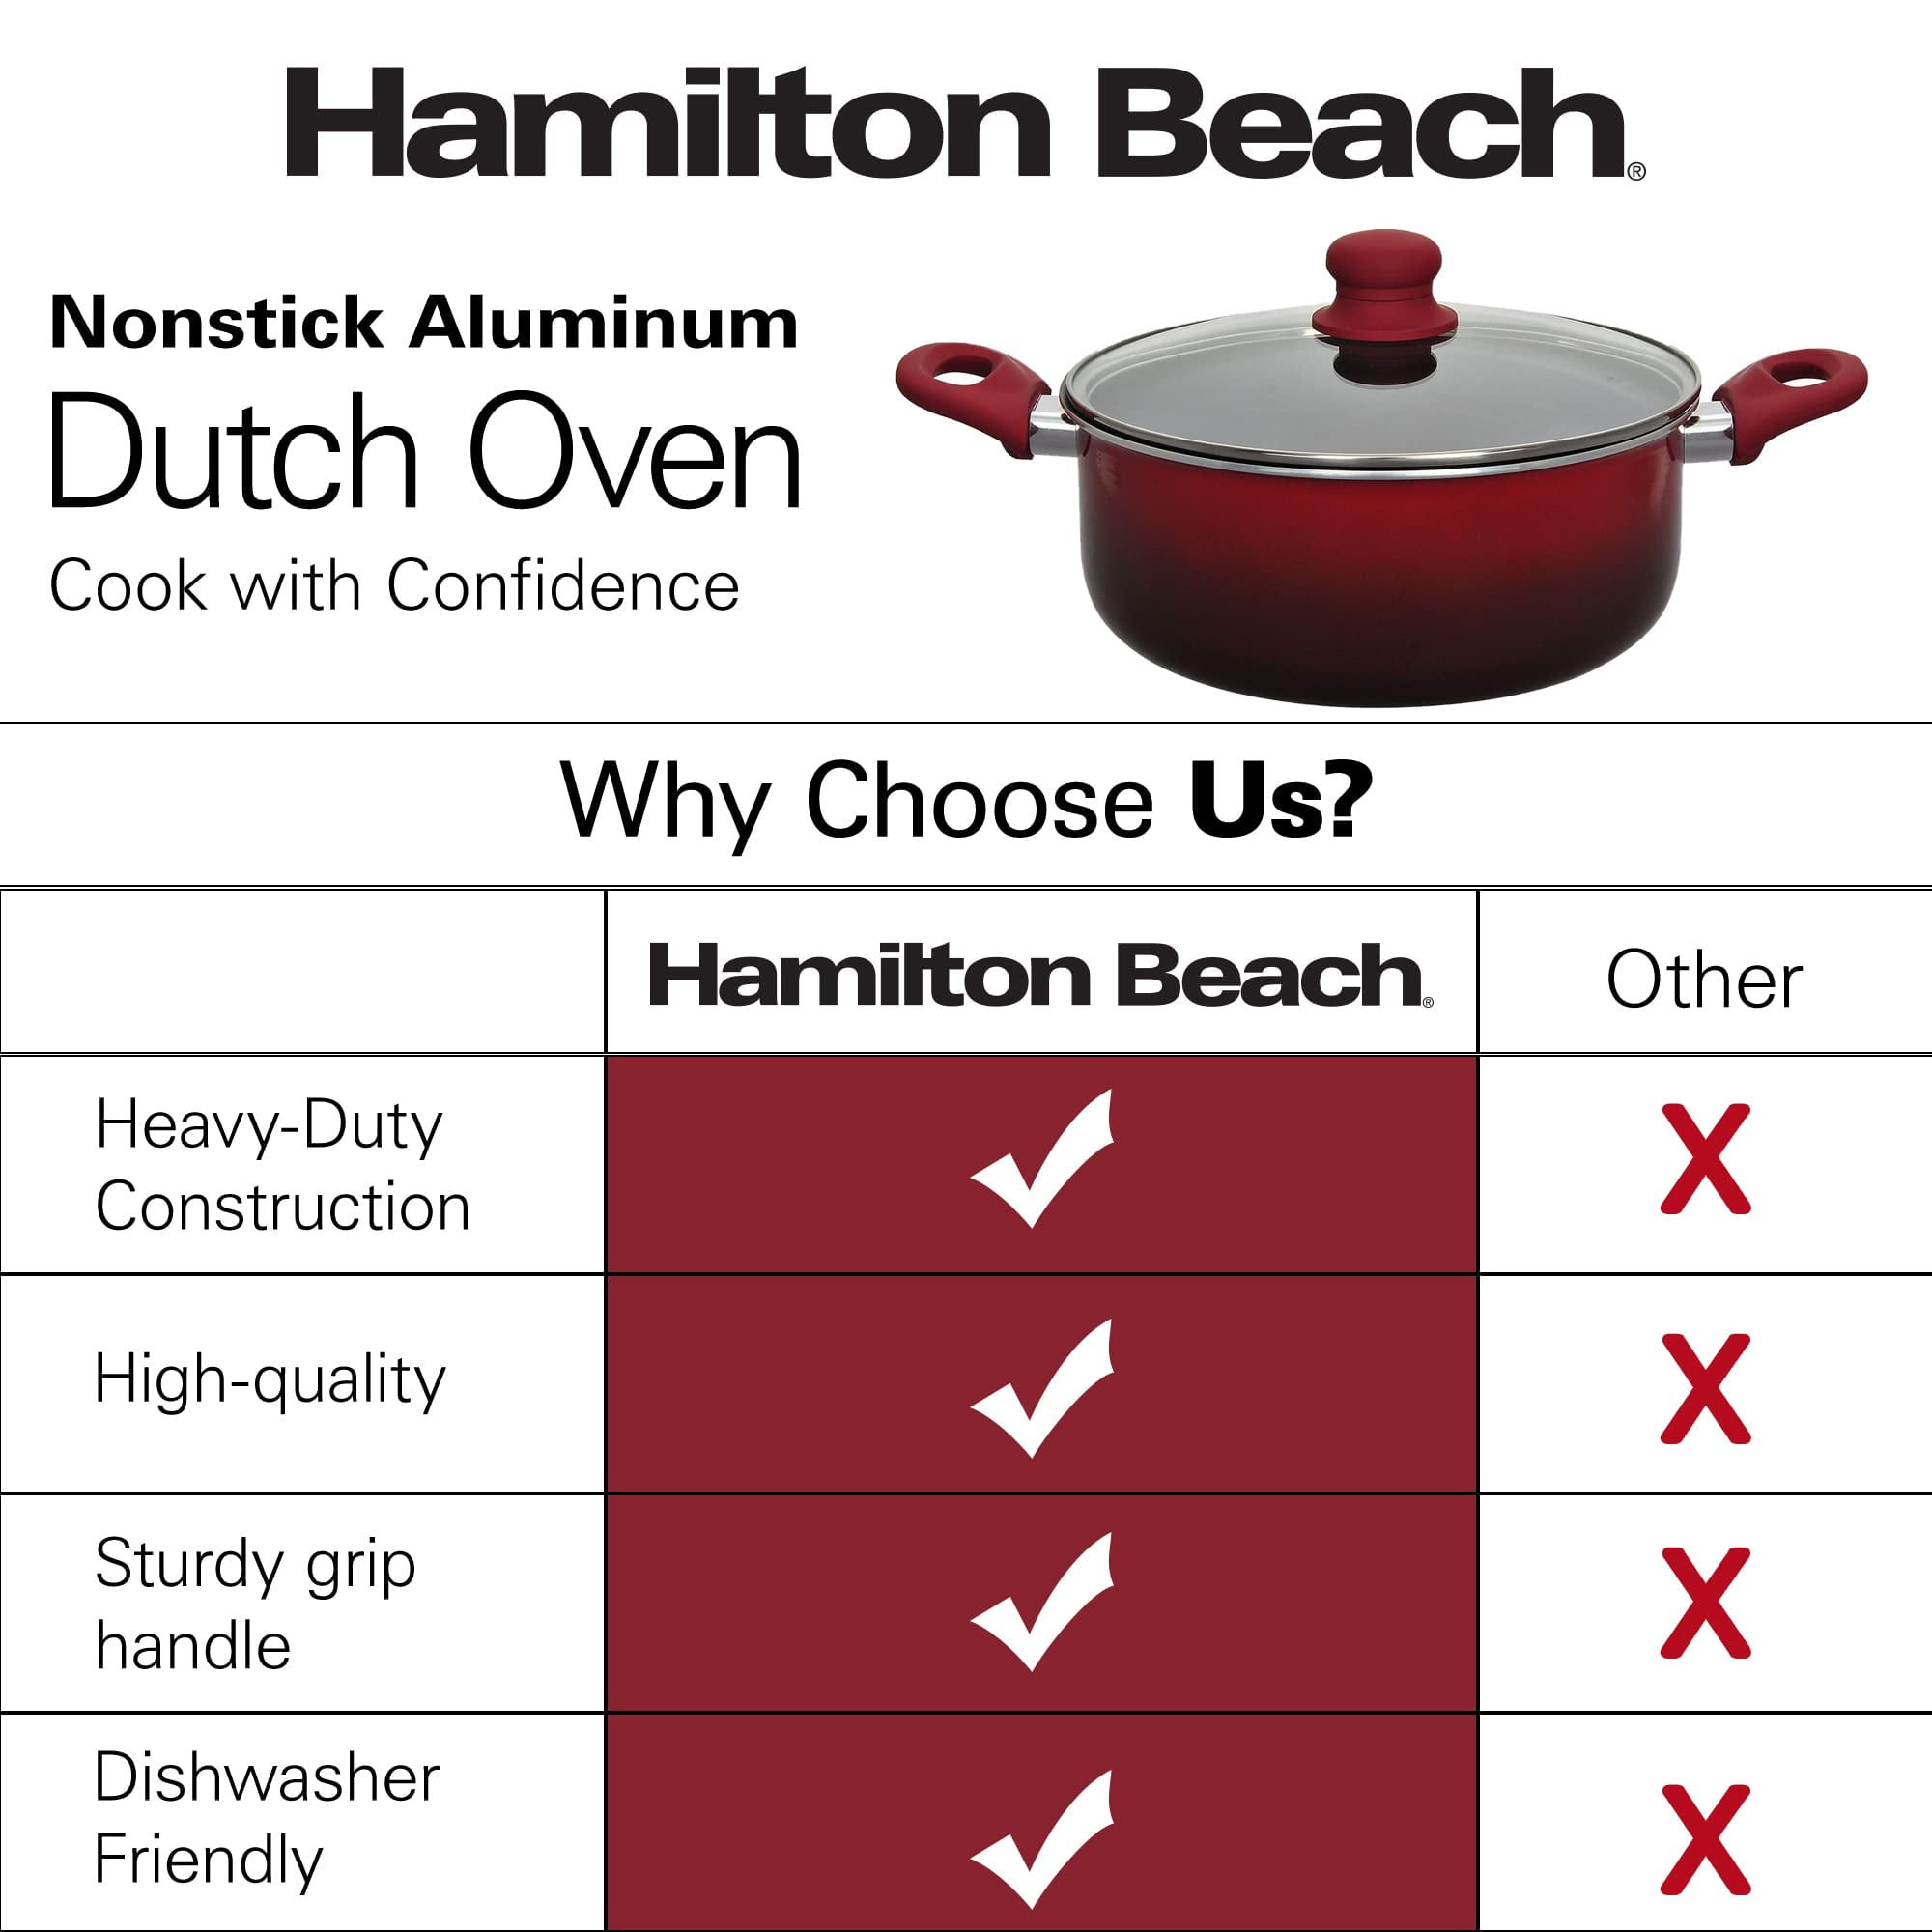 Hamilton Beach 12 Fry Pan Nonstick Coating, Aluminum Frying Pan with